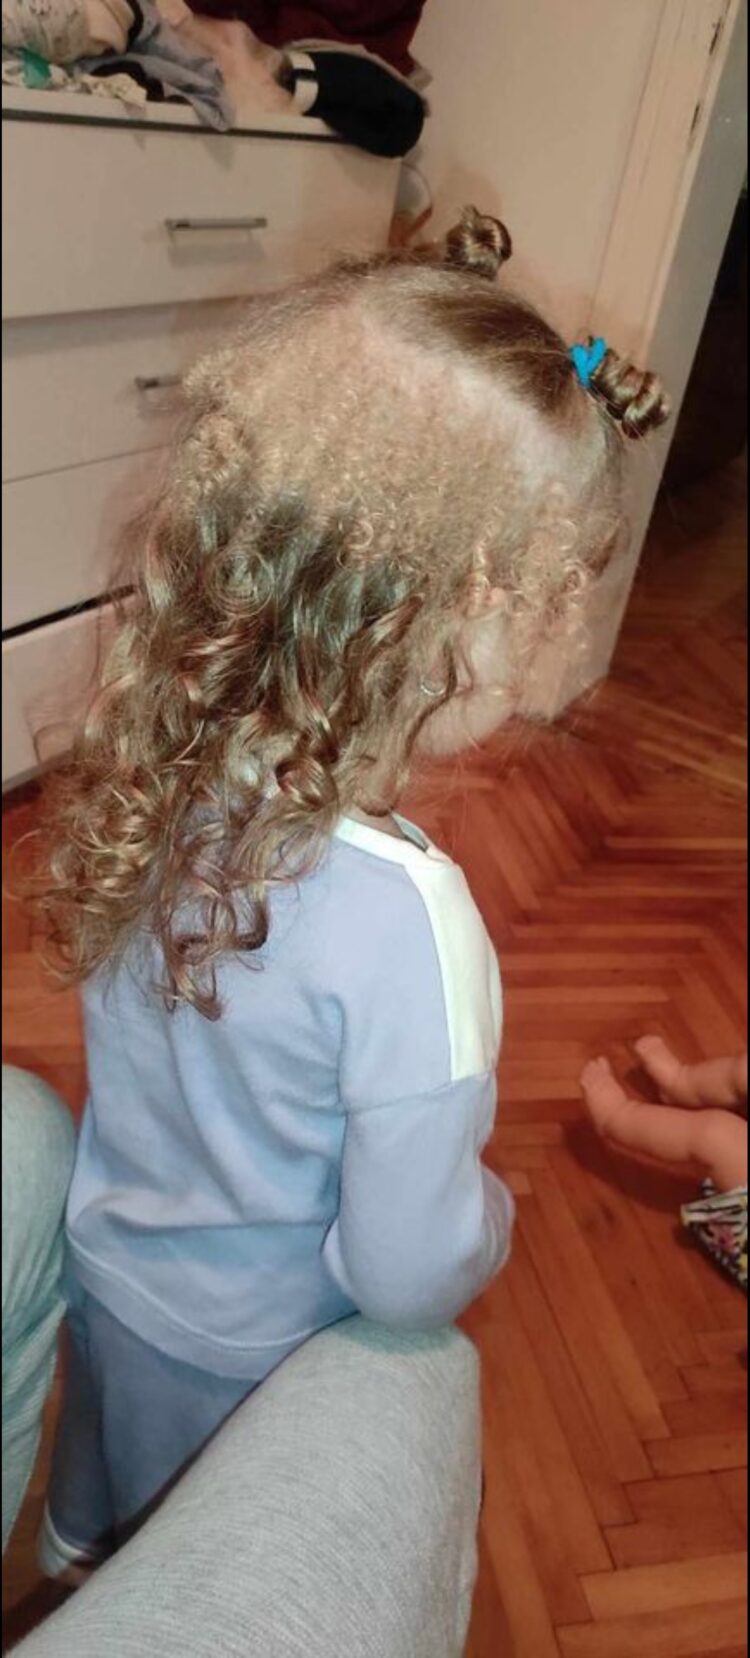 Srbska deklica ima tri vrste las